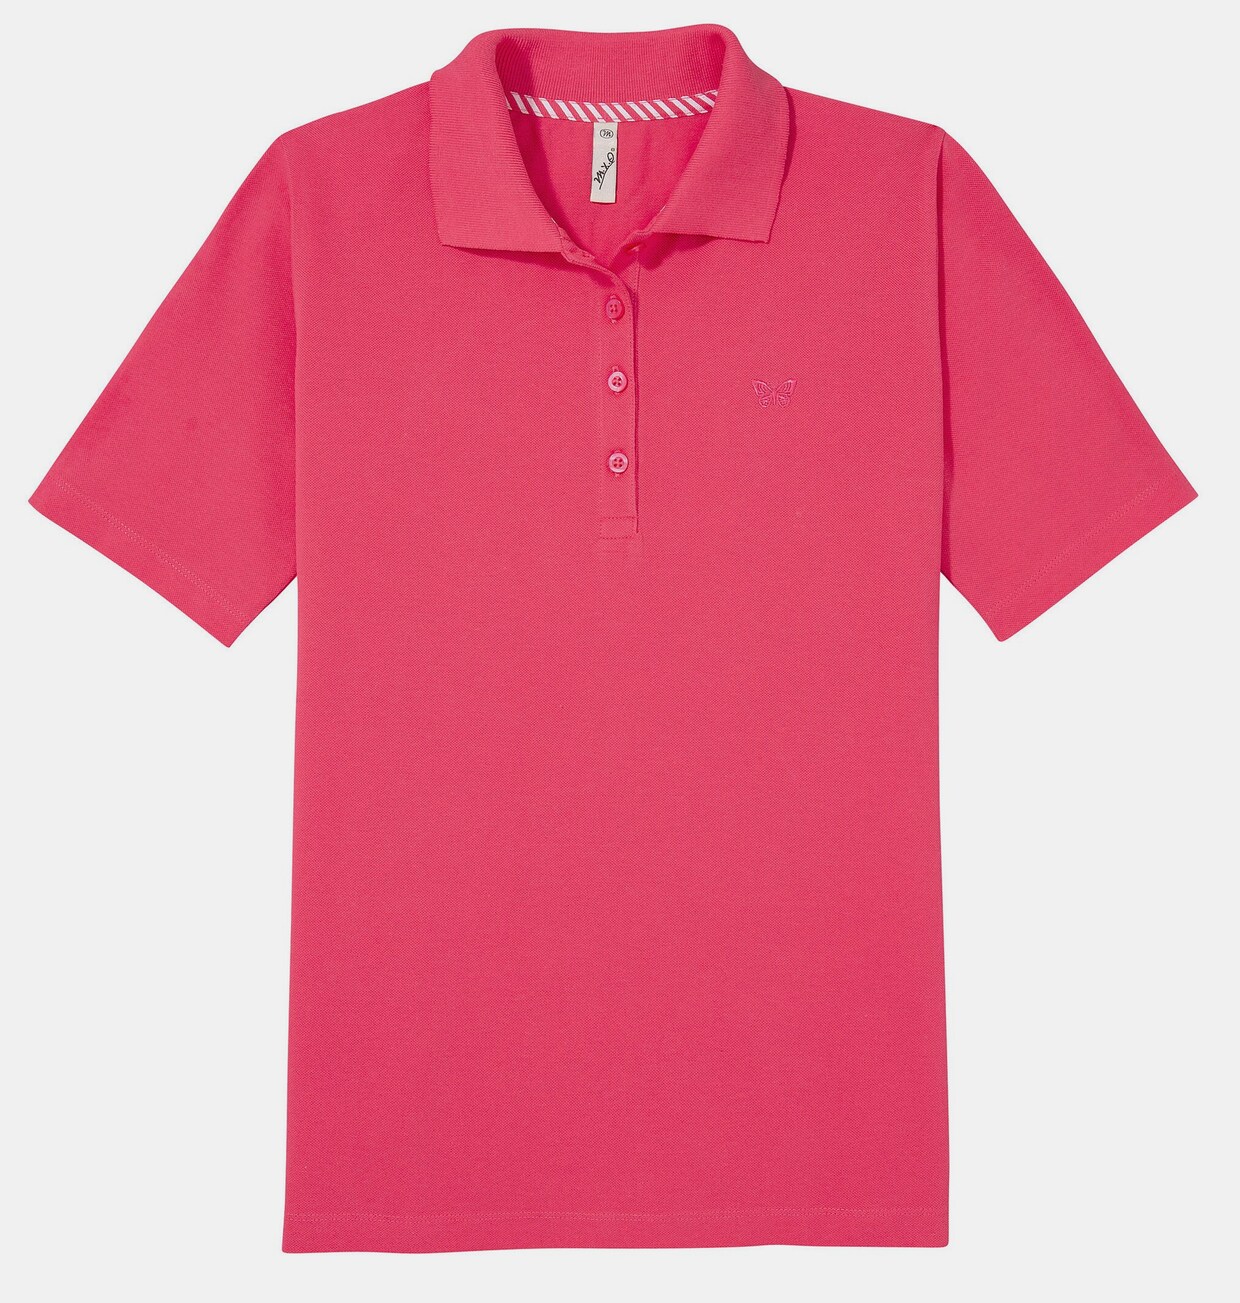 M.X.O Traditioneel shirt - rood